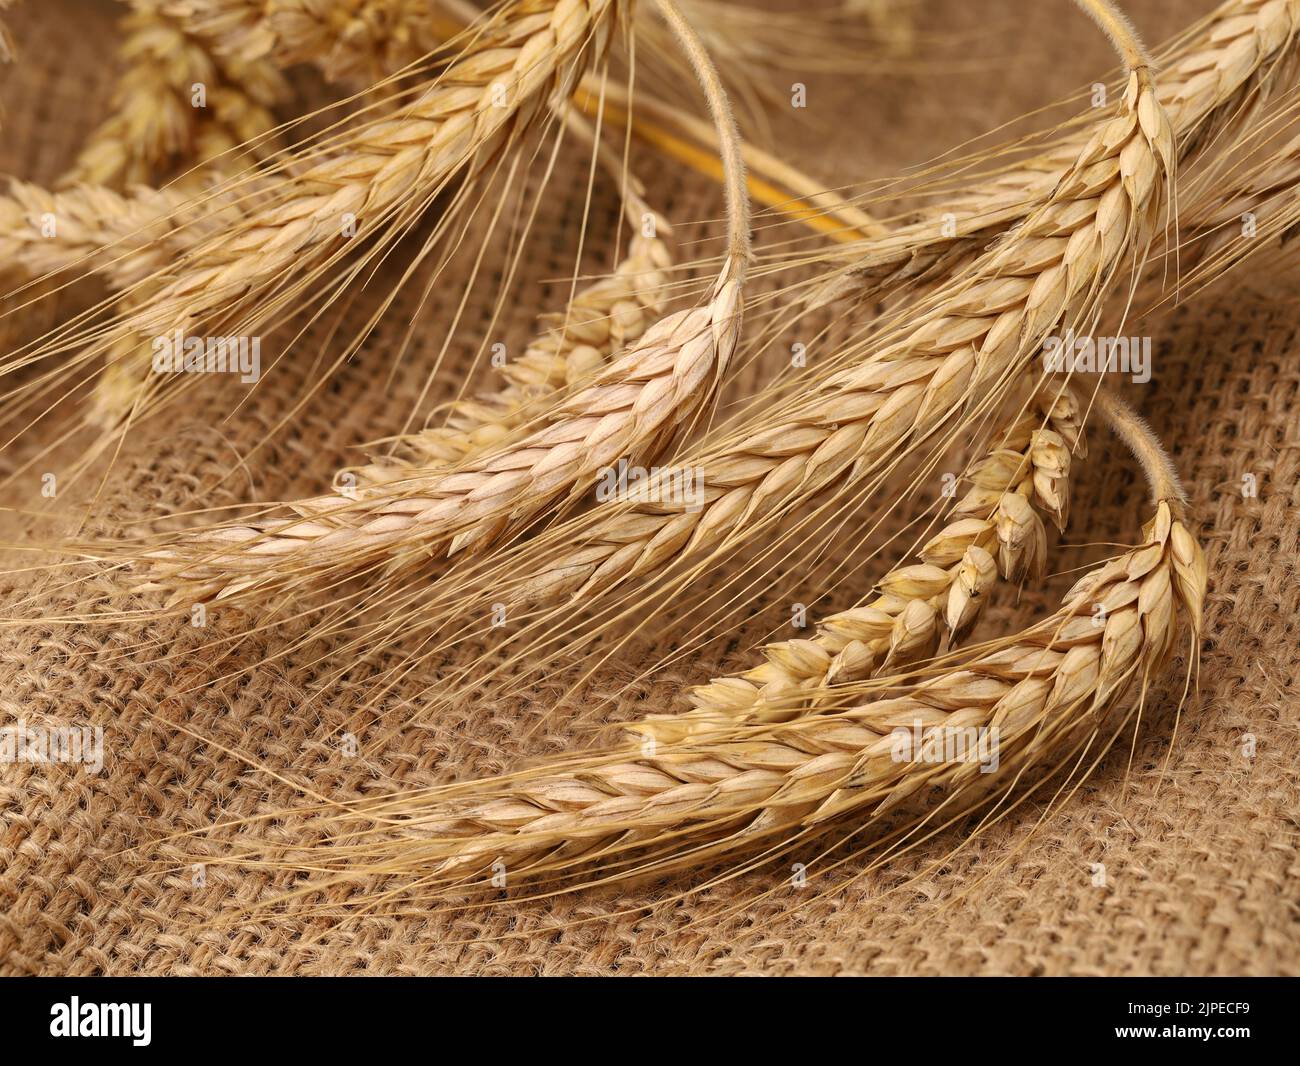 fresh wheat ears on burlap sack, close up Stock Photo